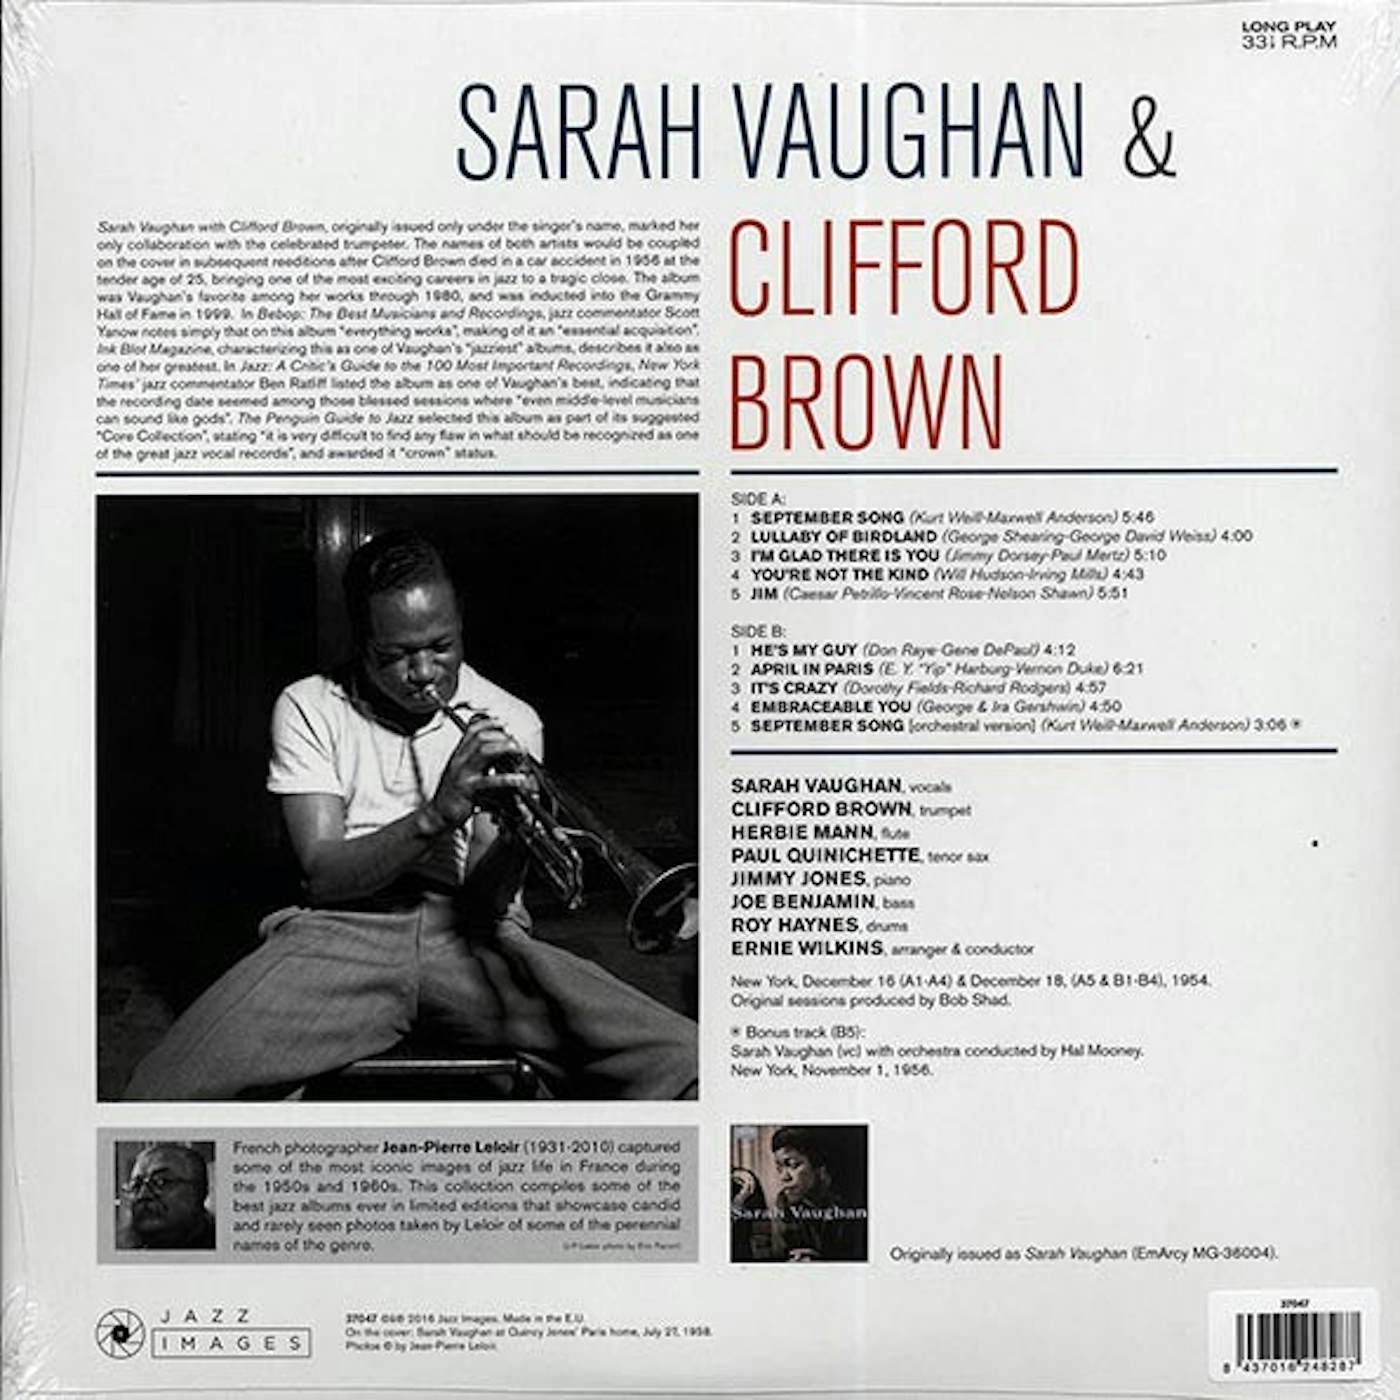 Sarah Vaughan, Clifford Brown  LP -  Sarah Vaughan & Clifford Brown (+ 2 bonus tracks) (ltd. ed.) (180g) (HighDef VV) (Vinyl)